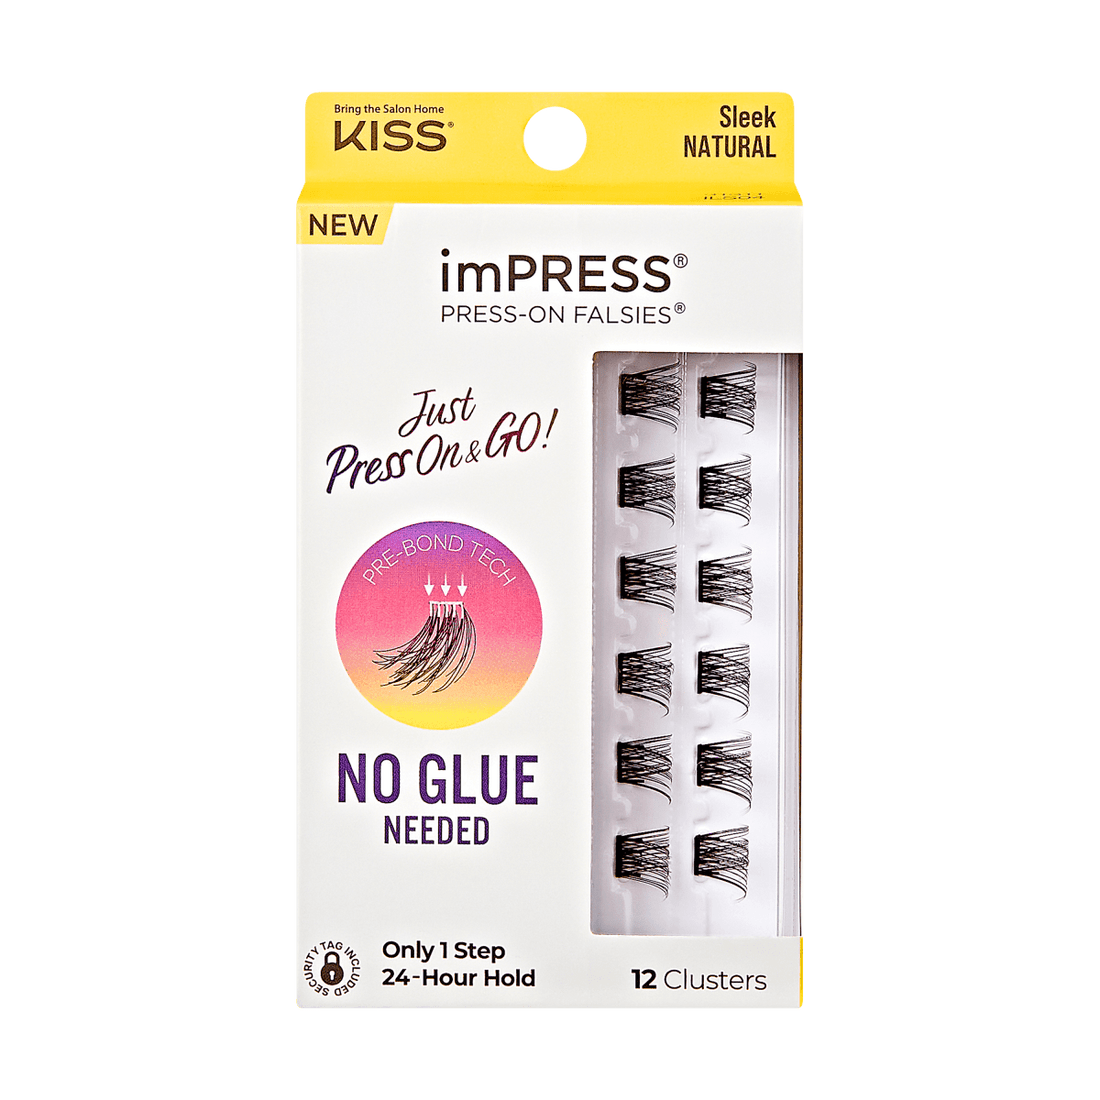 imPRESS Press-On Falsies Minipack 12 Clusters – Sleek